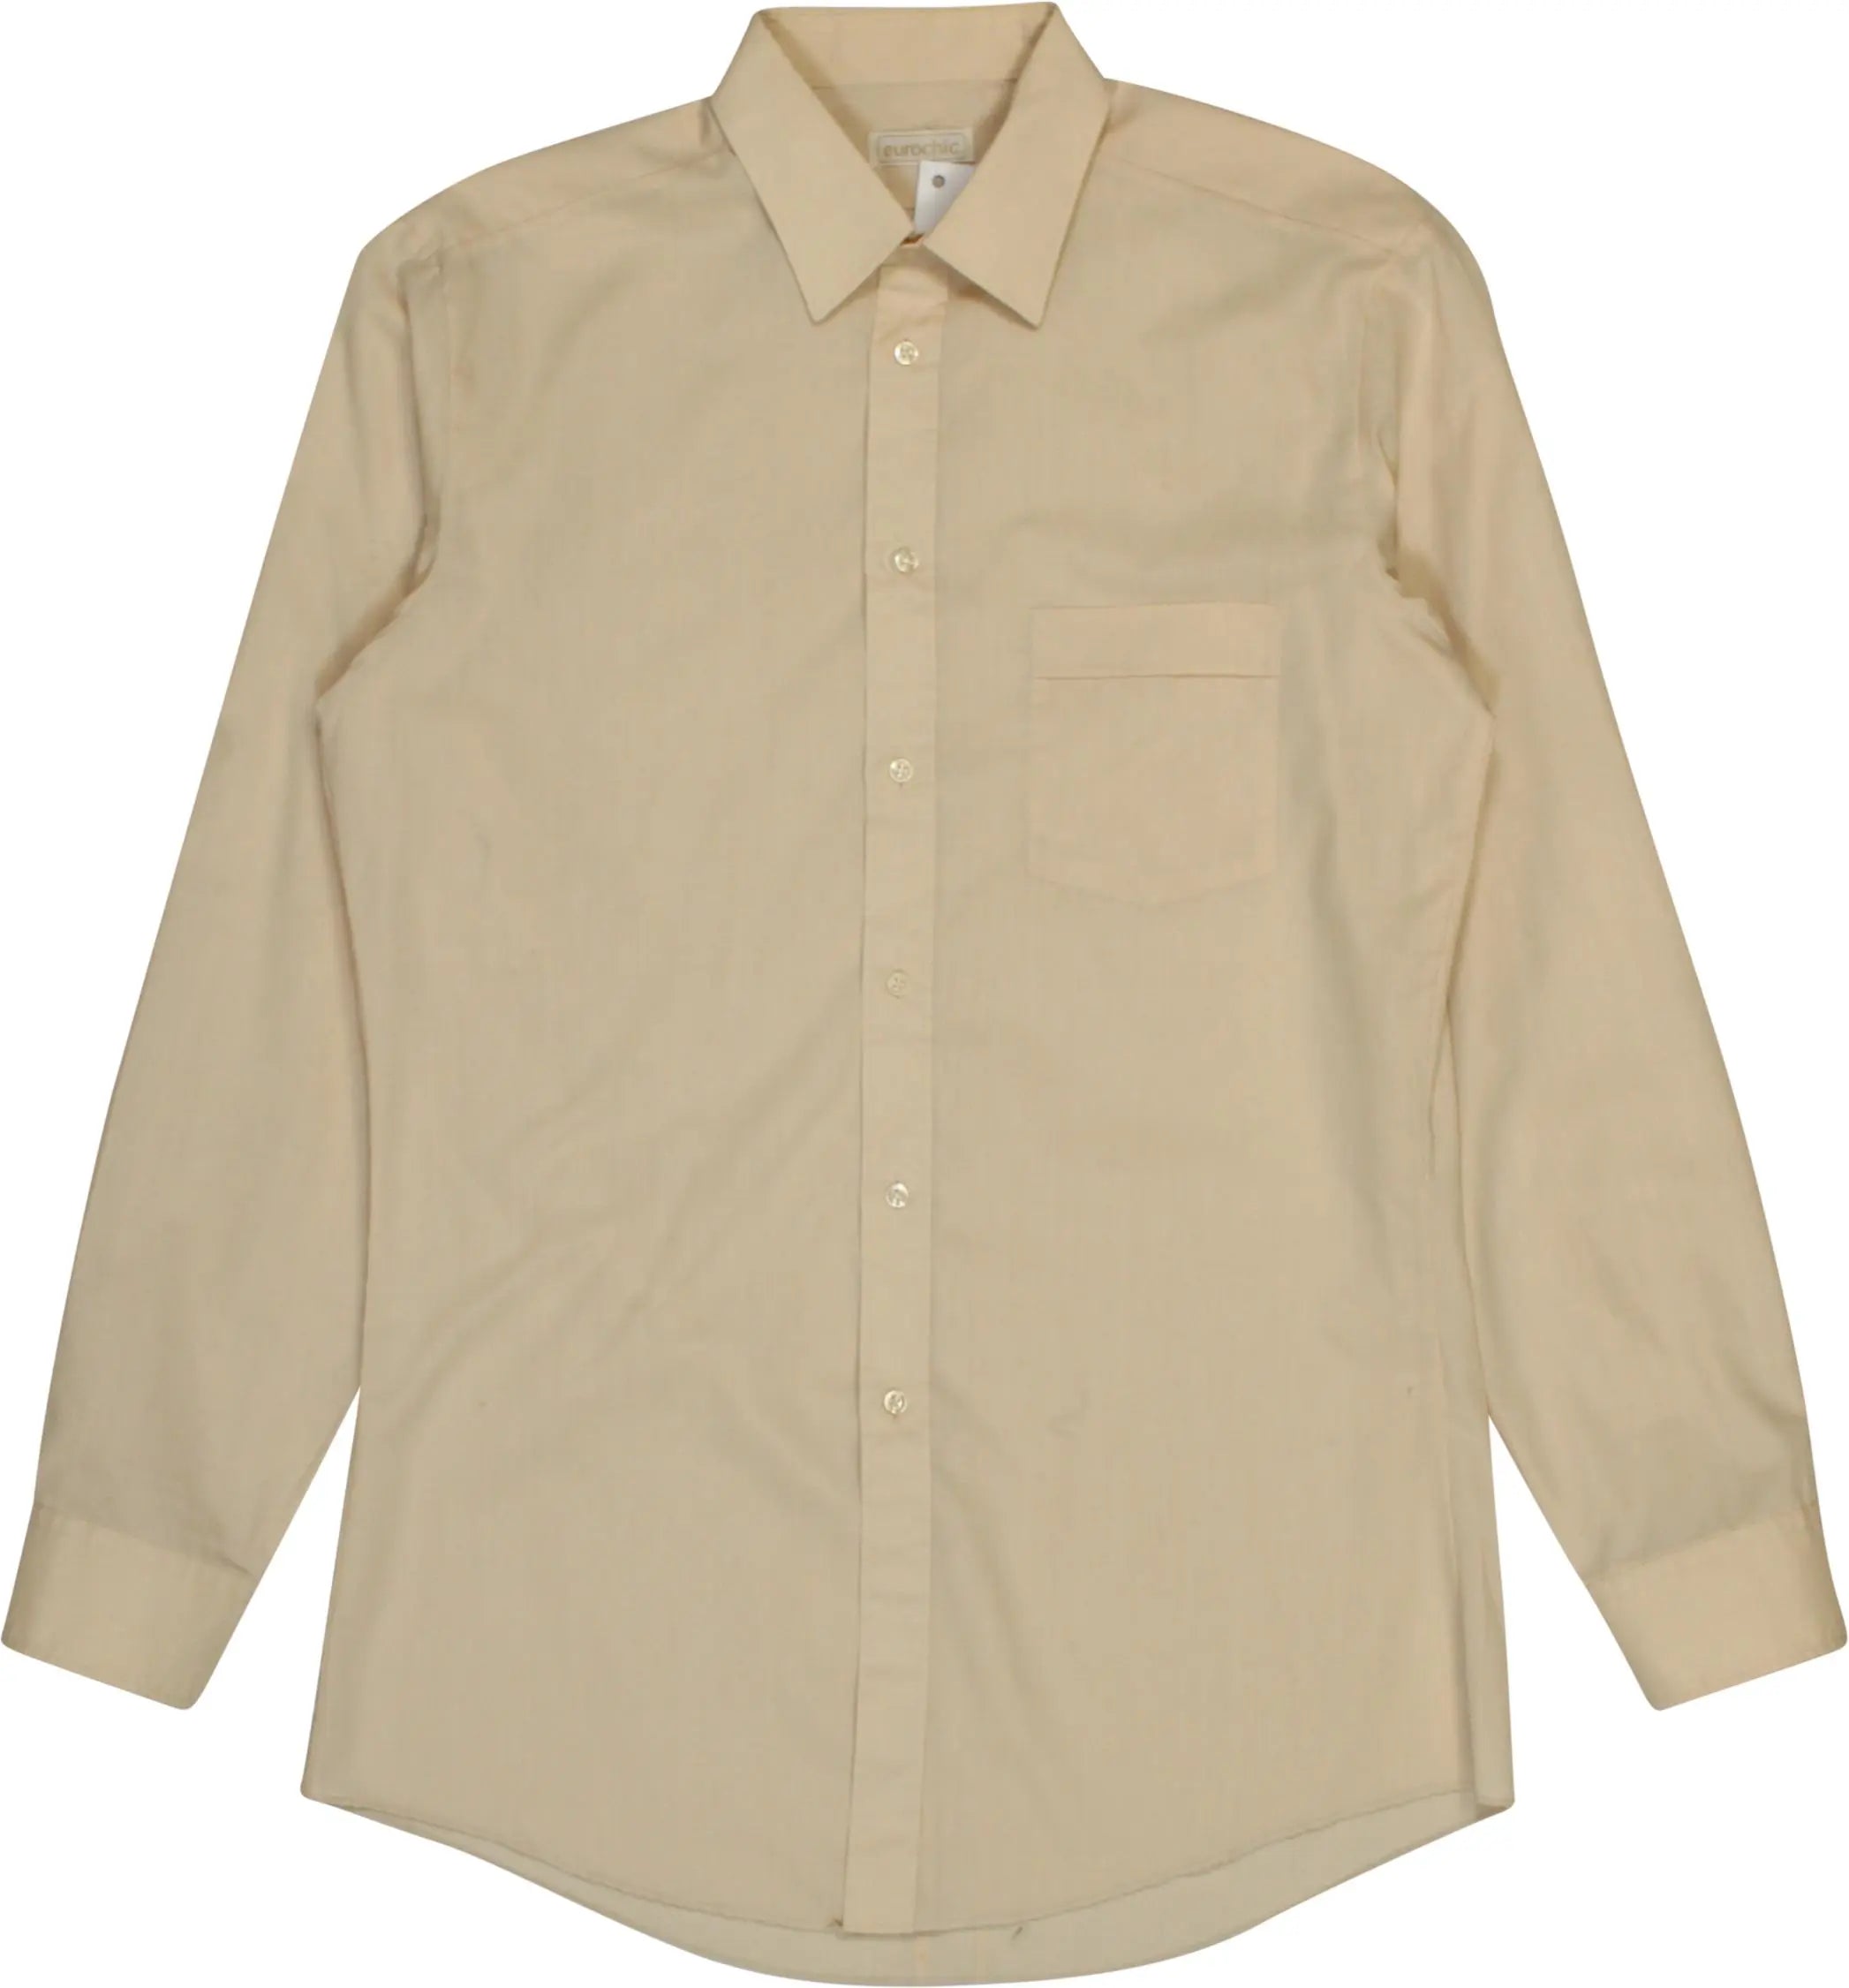 Eurochic - Beige Plain Shirt- ThriftTale.com - Vintage and second handclothing